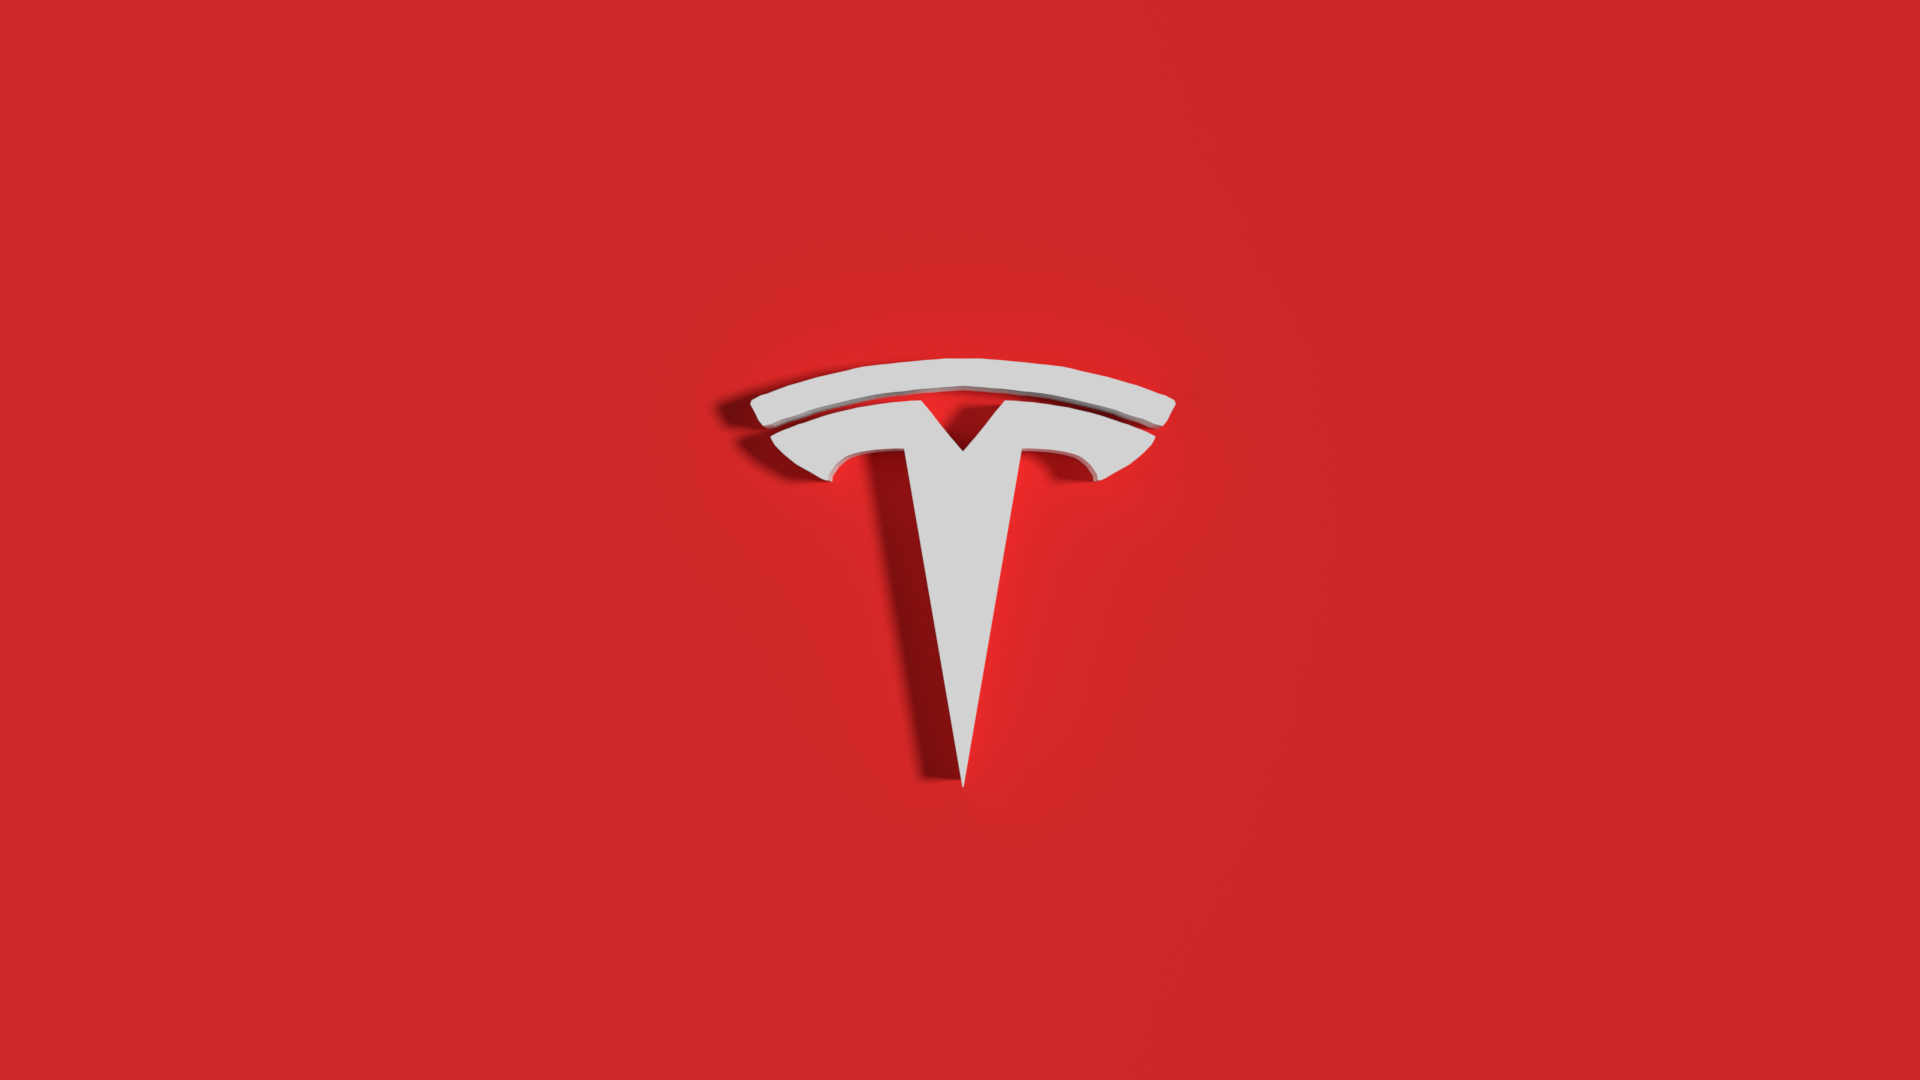 Tesla Logo, www.imgkid.com, The Image Kid Has It! helpful non helpful. imgk...